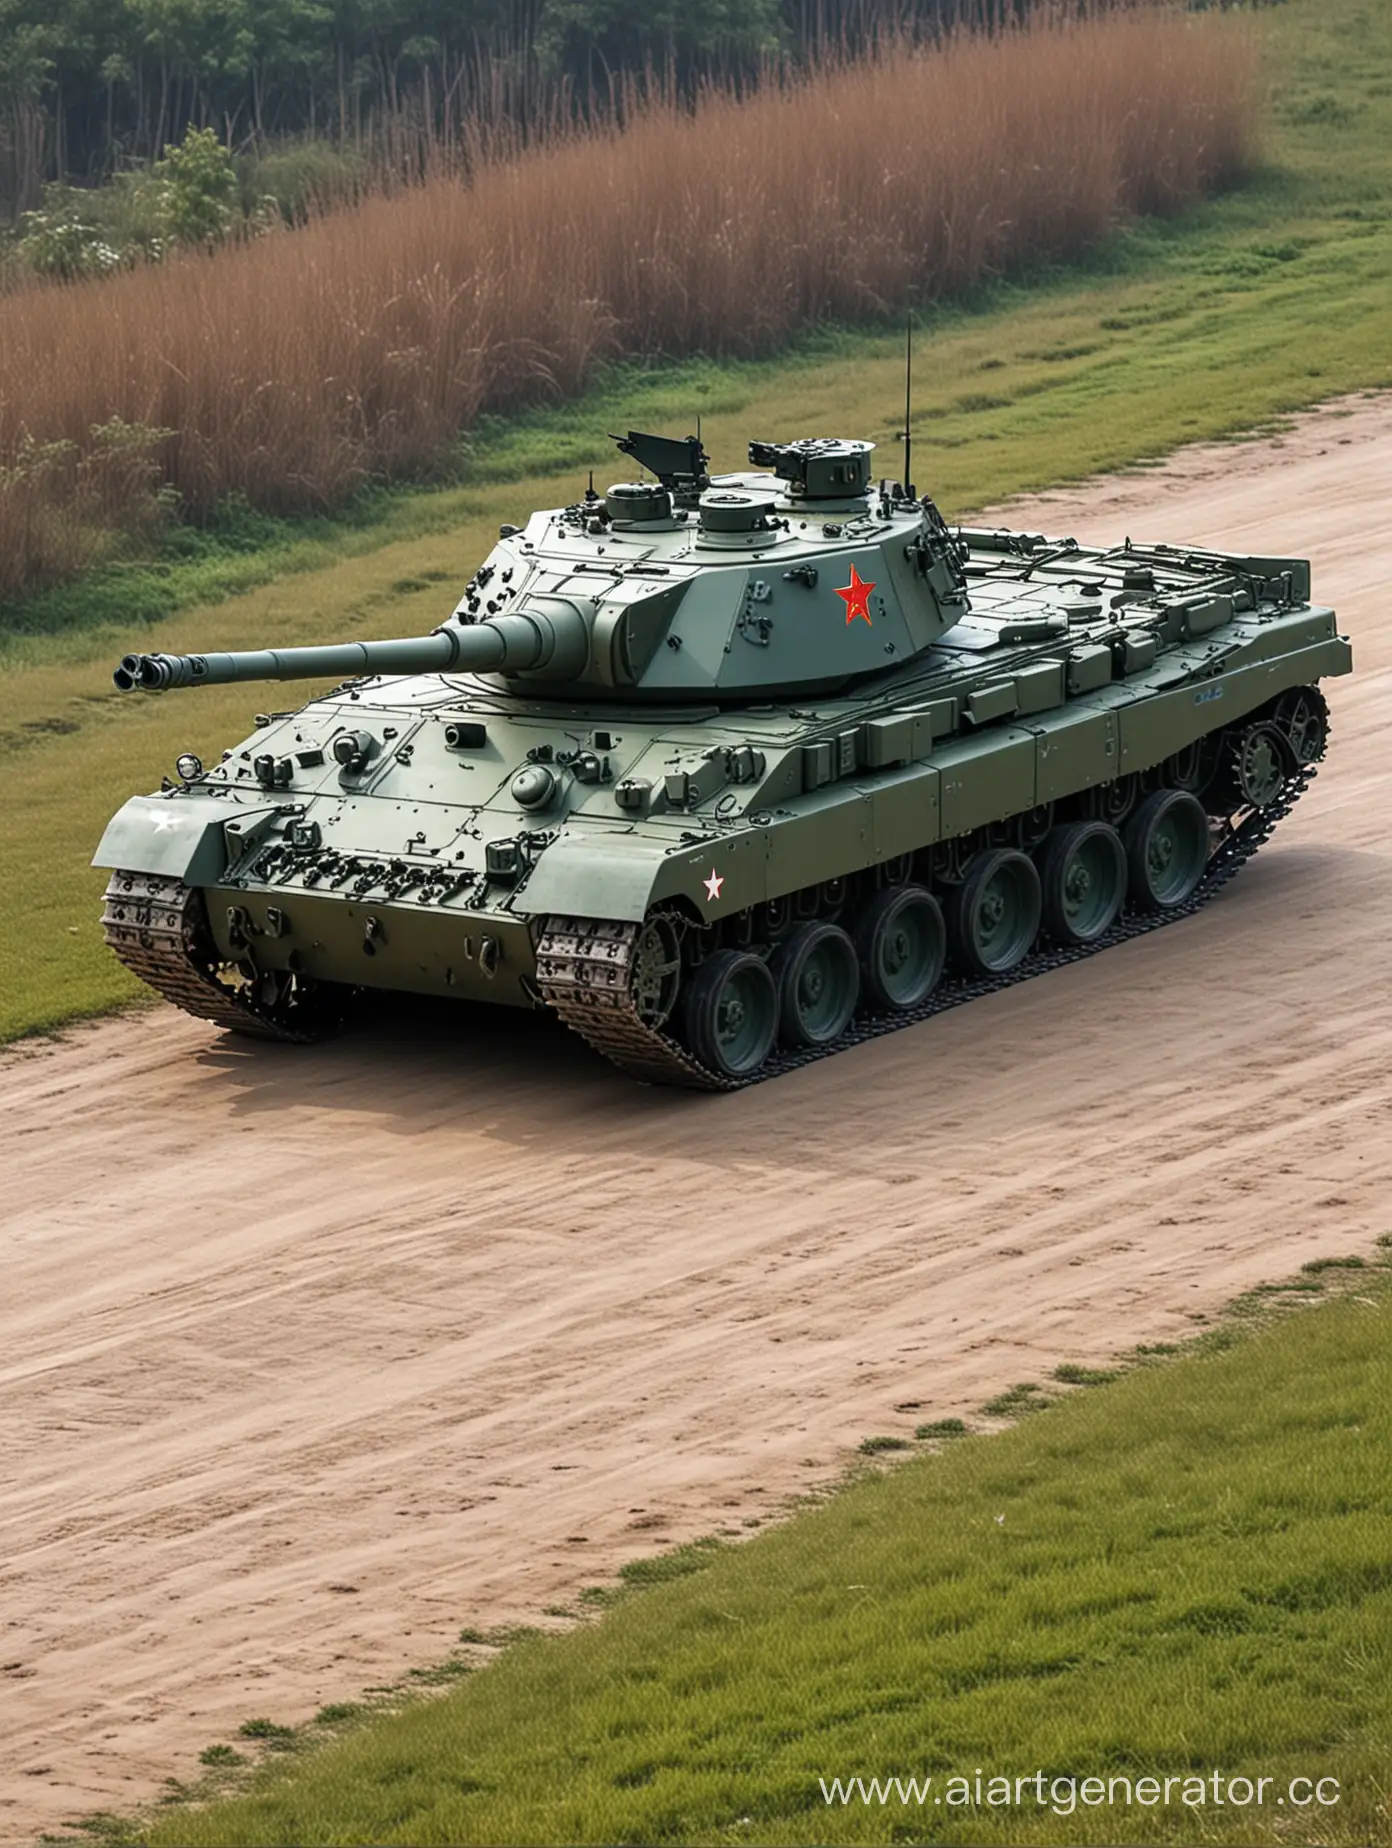 Modern-Chinese-Tank-in-Desert-Camouflage-on-Training-Maneuvers